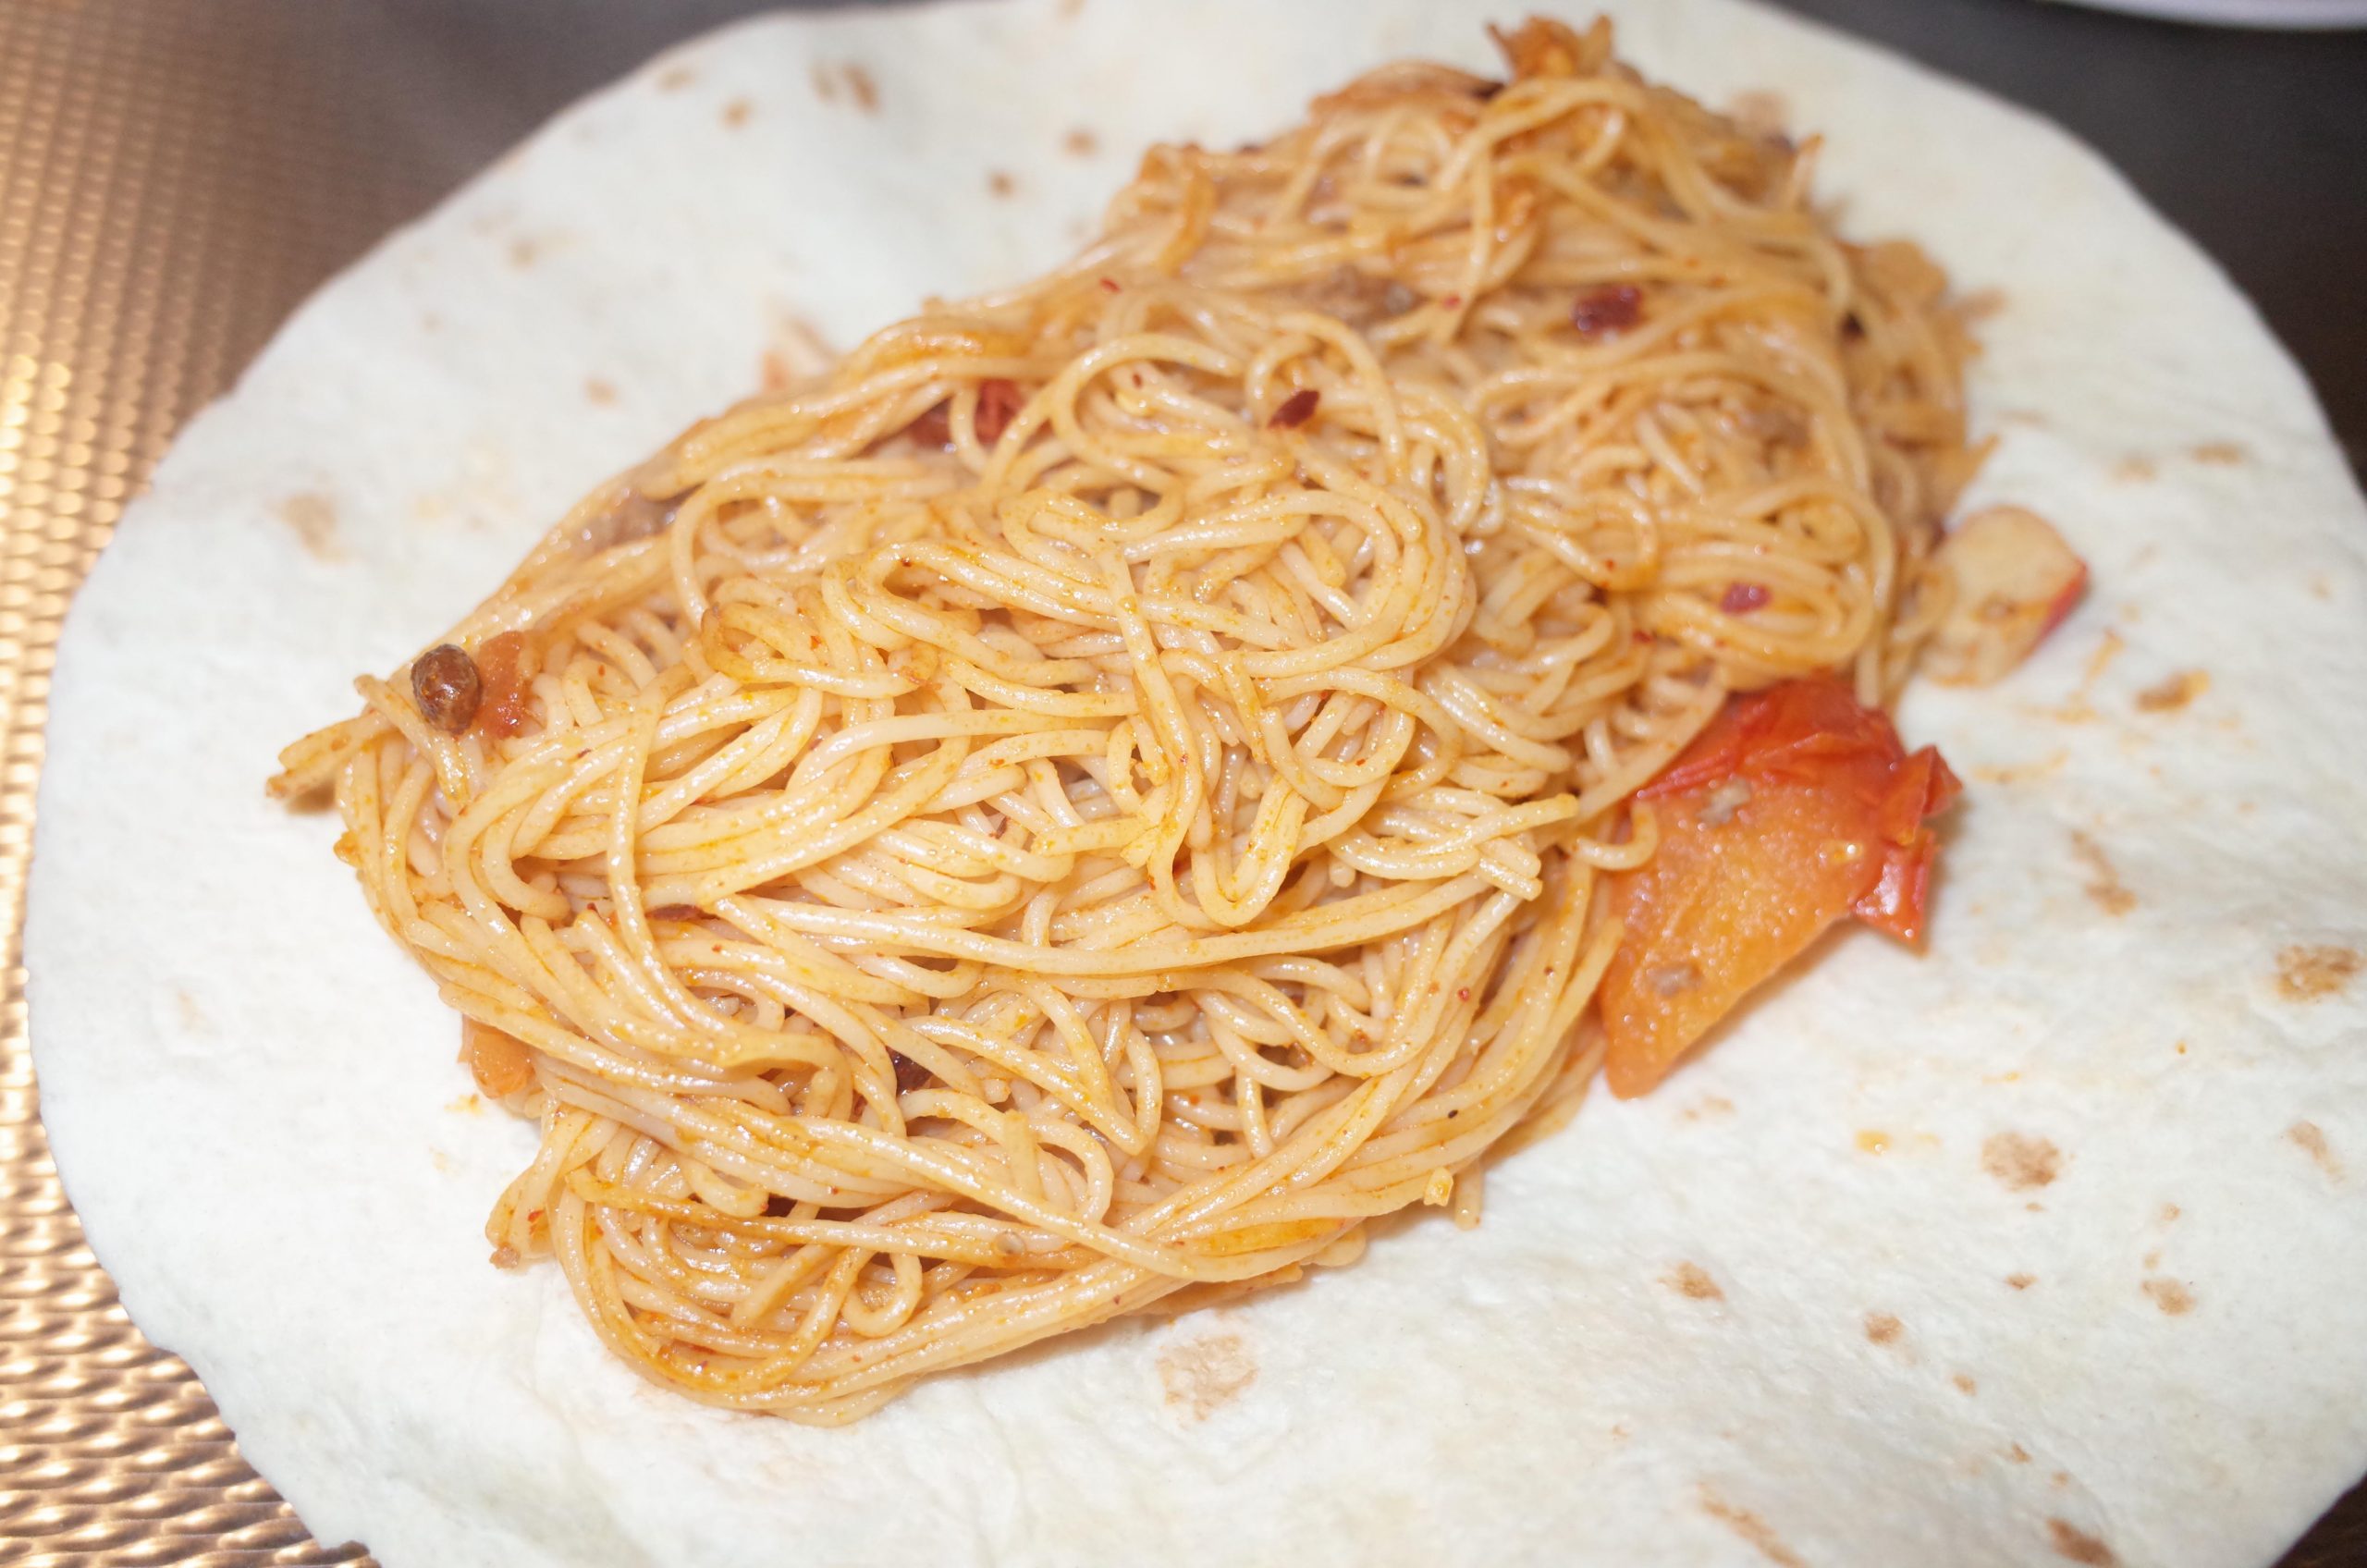 Spaghetti, tomatoes, tortilla, peanut